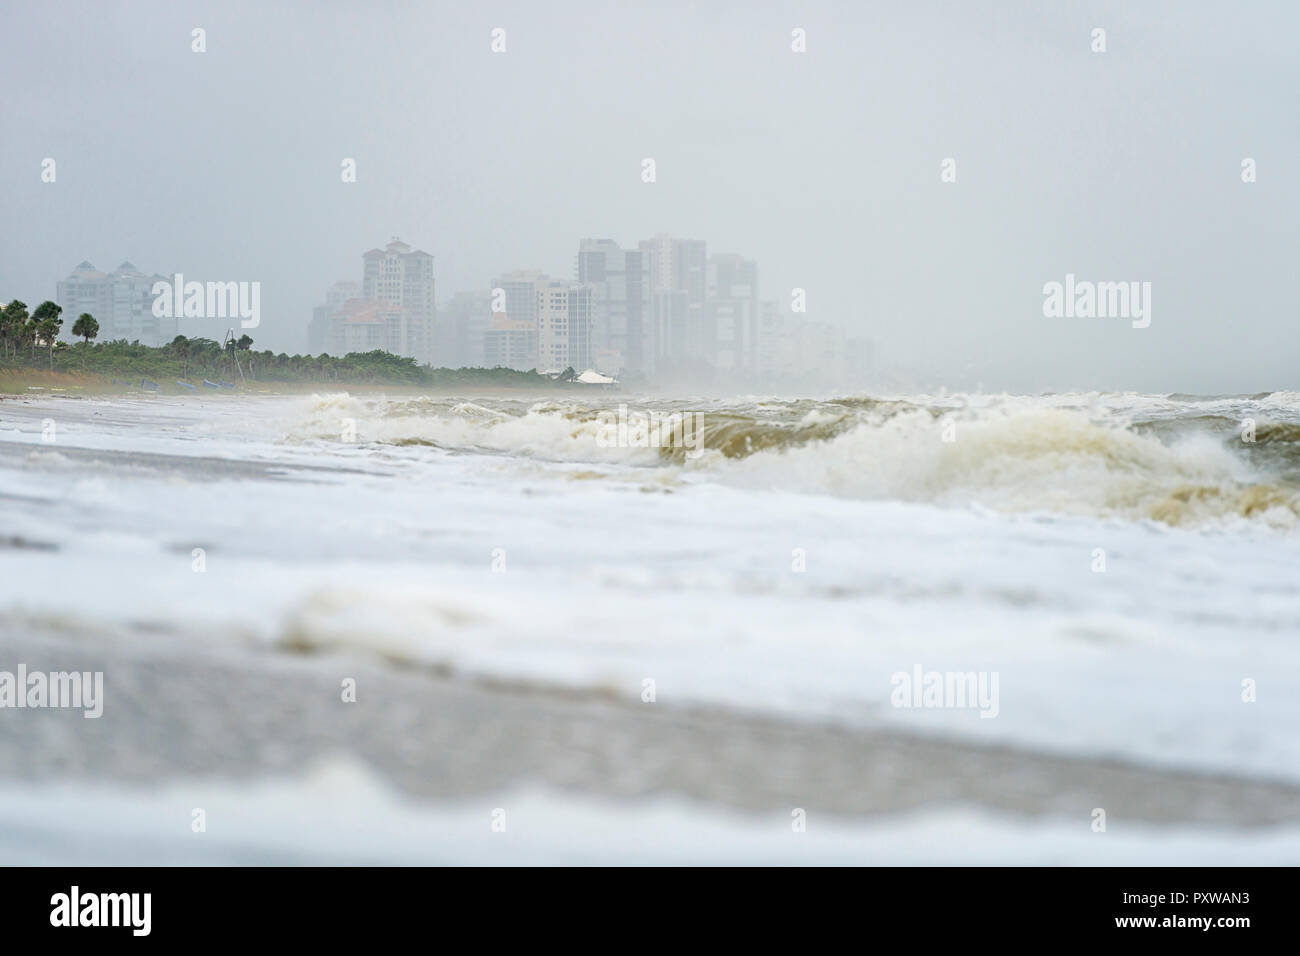 United States of America, Florida, Naples, Vanderbilt Beach, waves and spray after hurricane Harvey in front of hotel buildings at Vanderbilt Beach Stock Photo